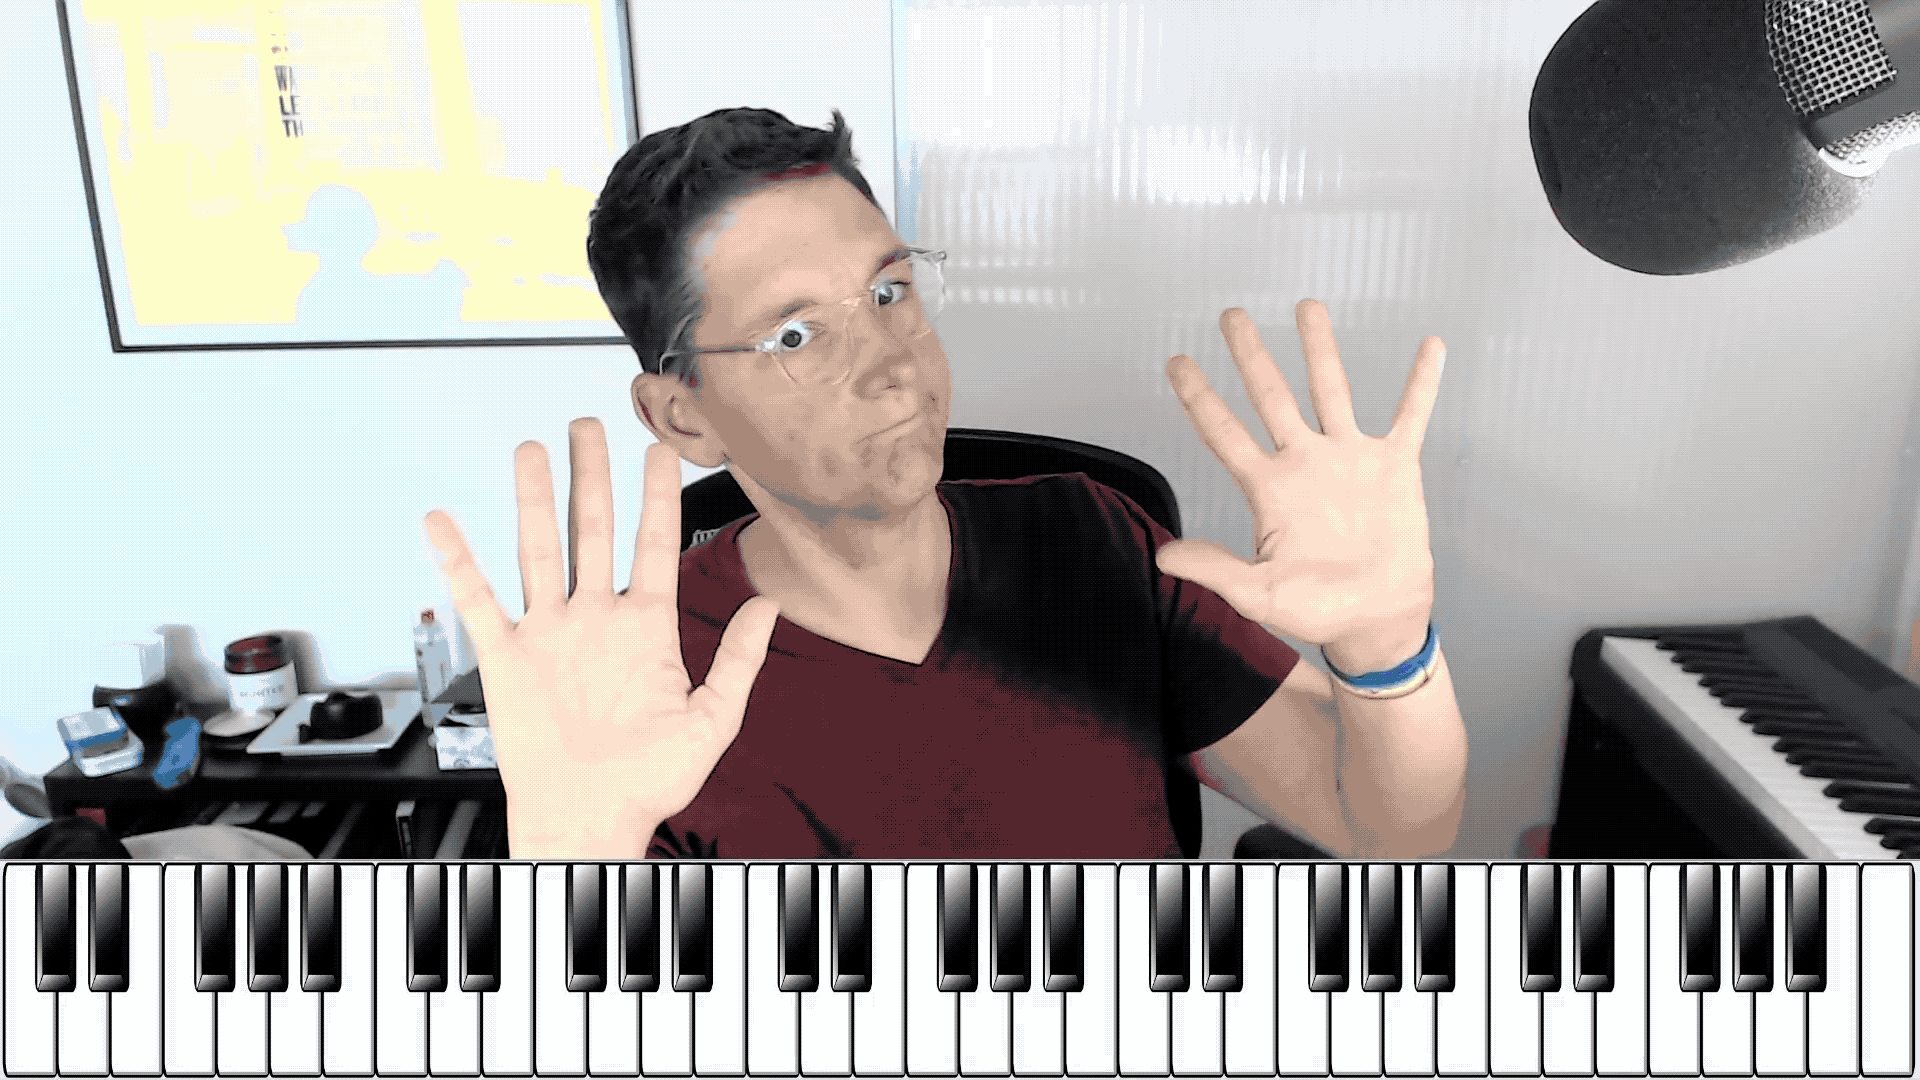 Virtual MIDI Piano Keyboard online - Software Downloads